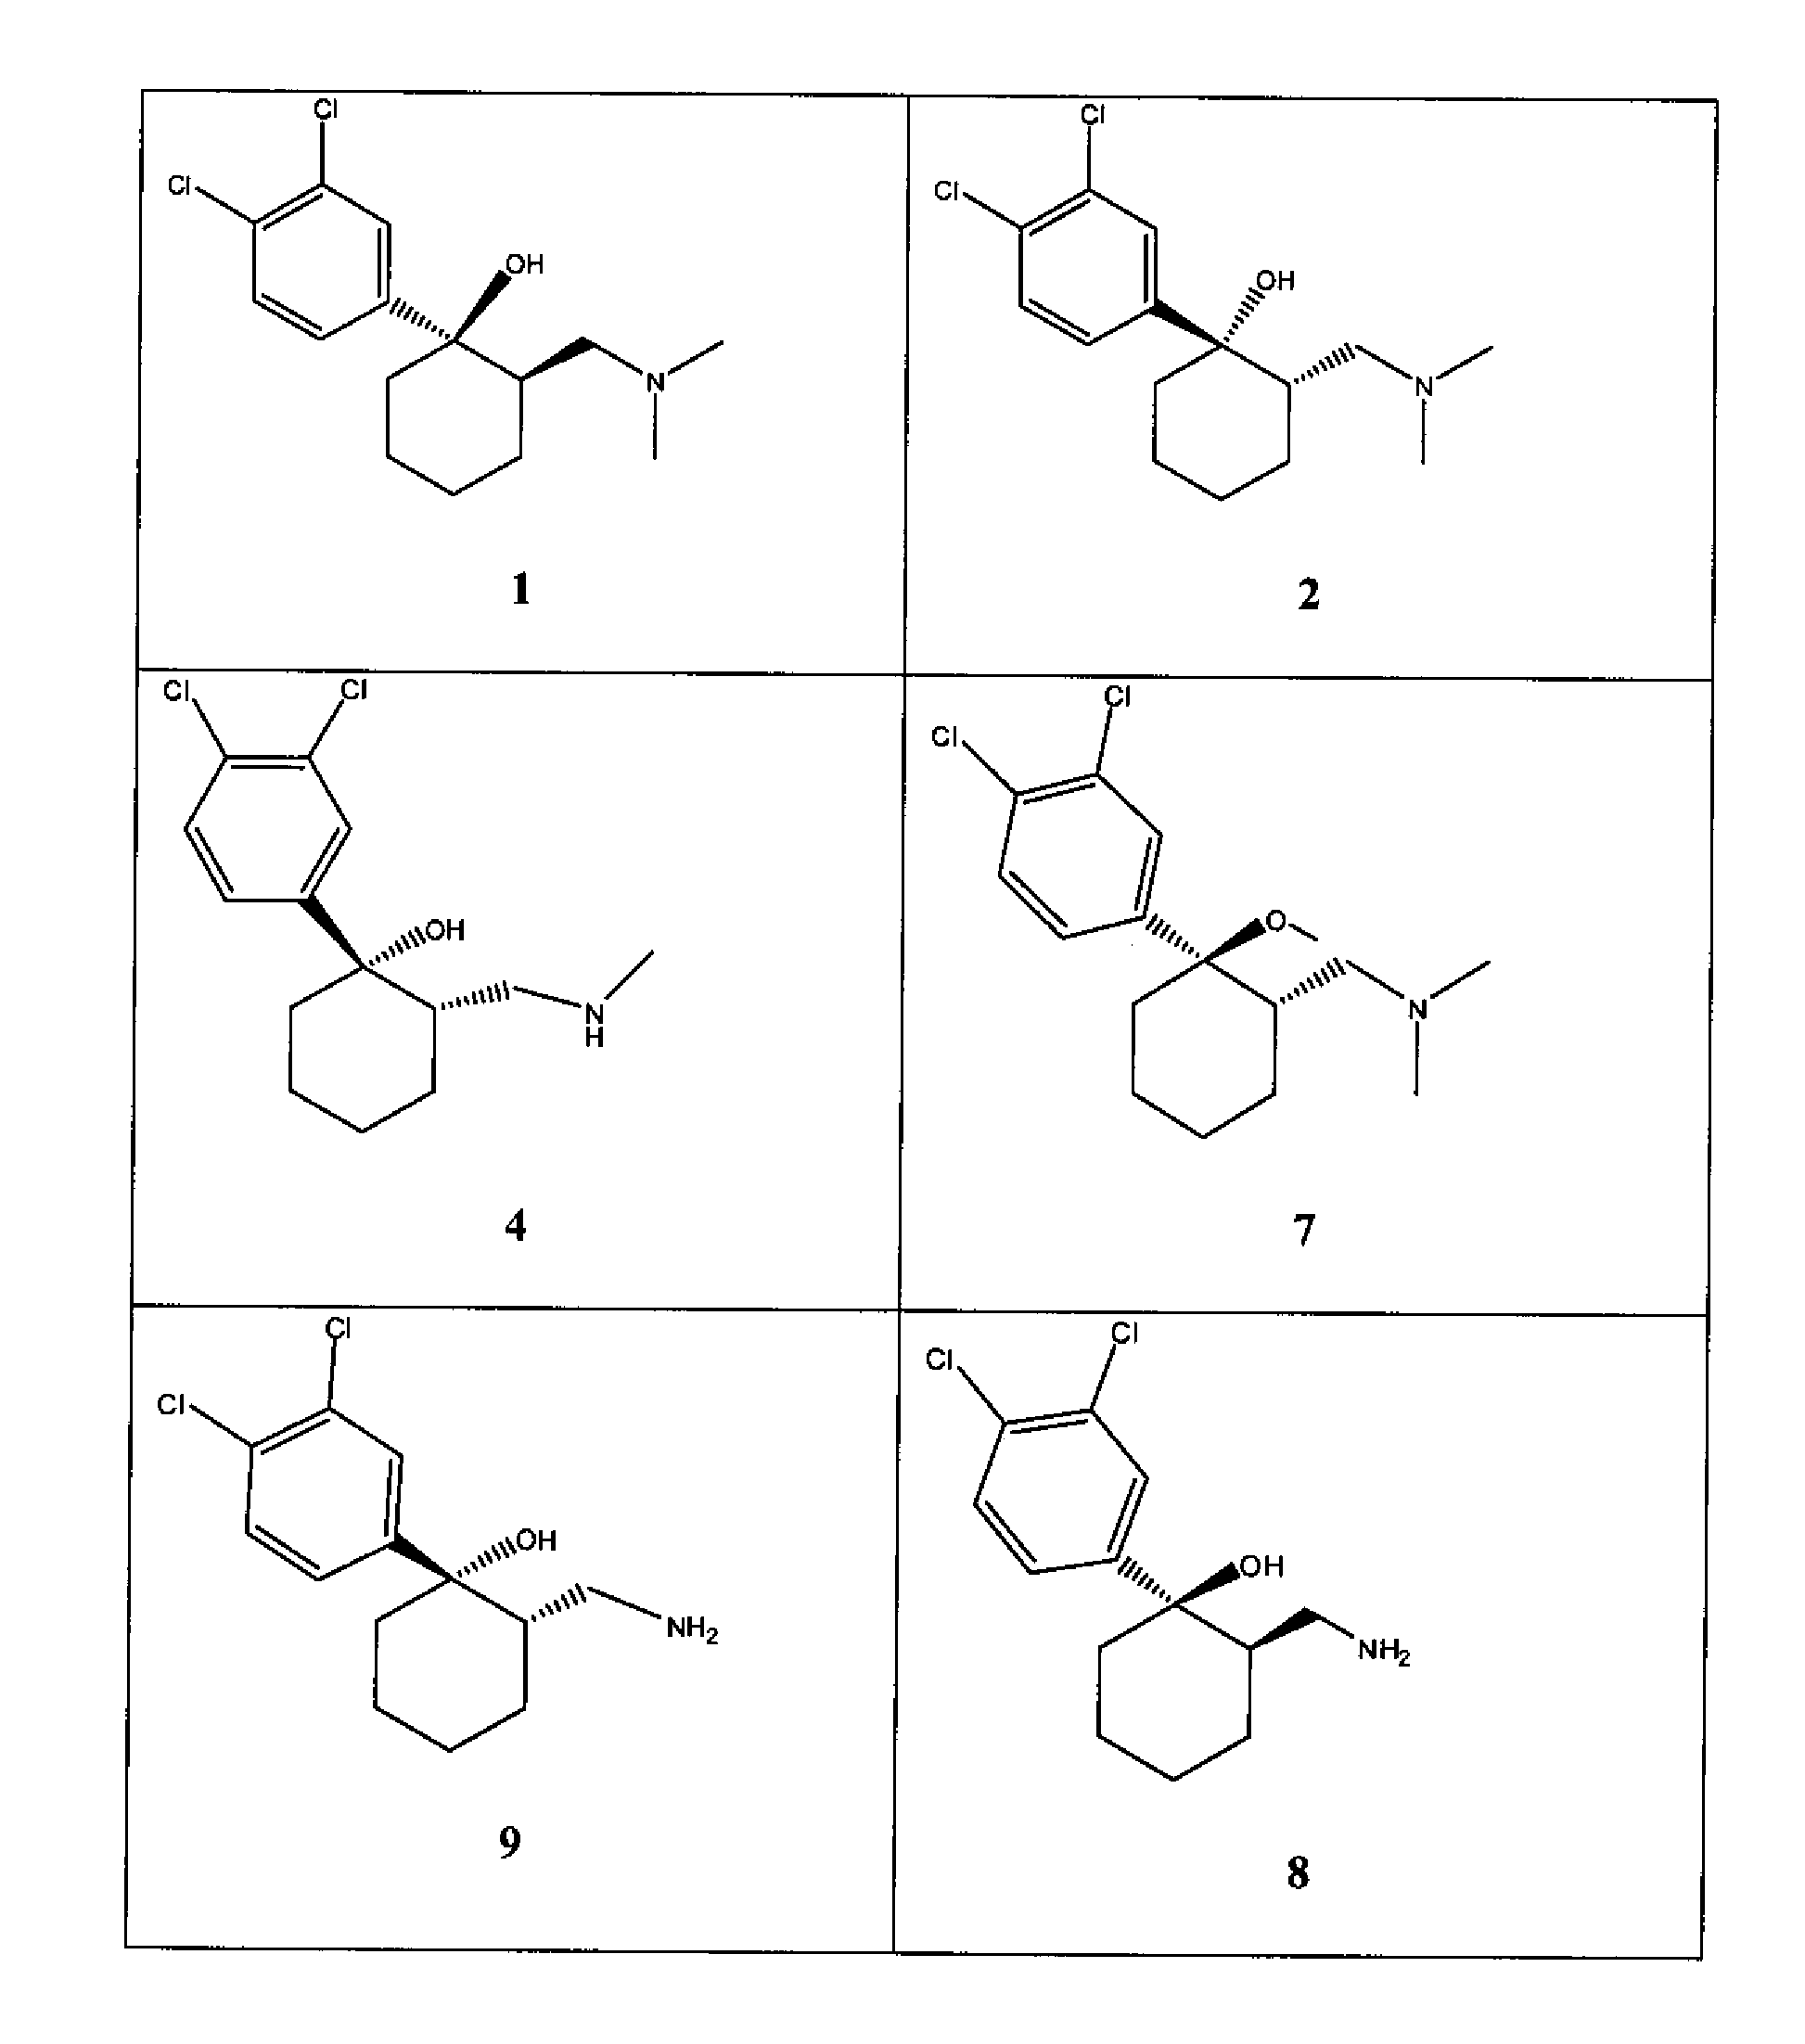 Phenyl substituted cycloalkylamines as monoamine reuptake inhibitors